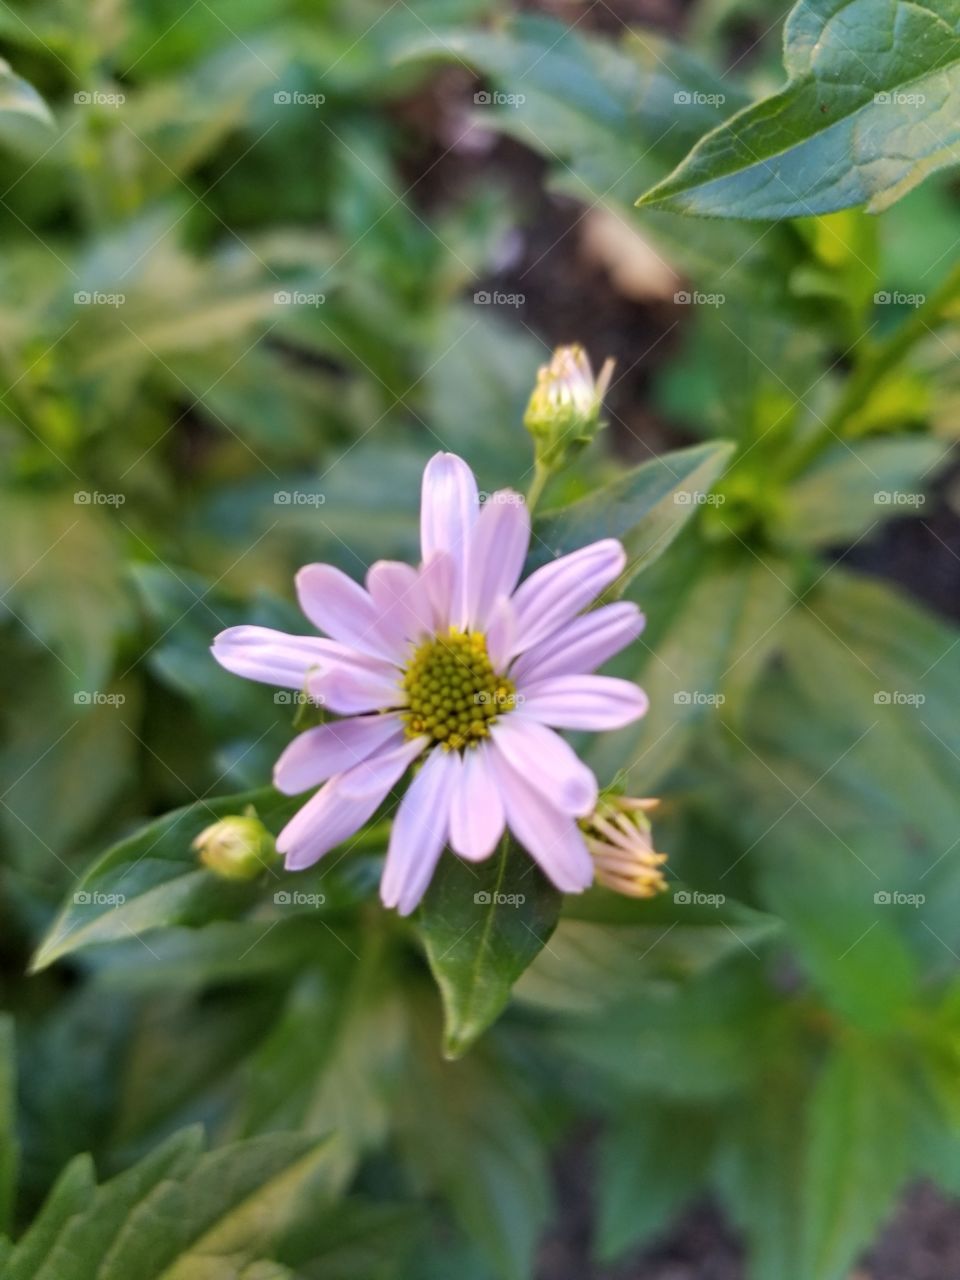 Cute purple daisy